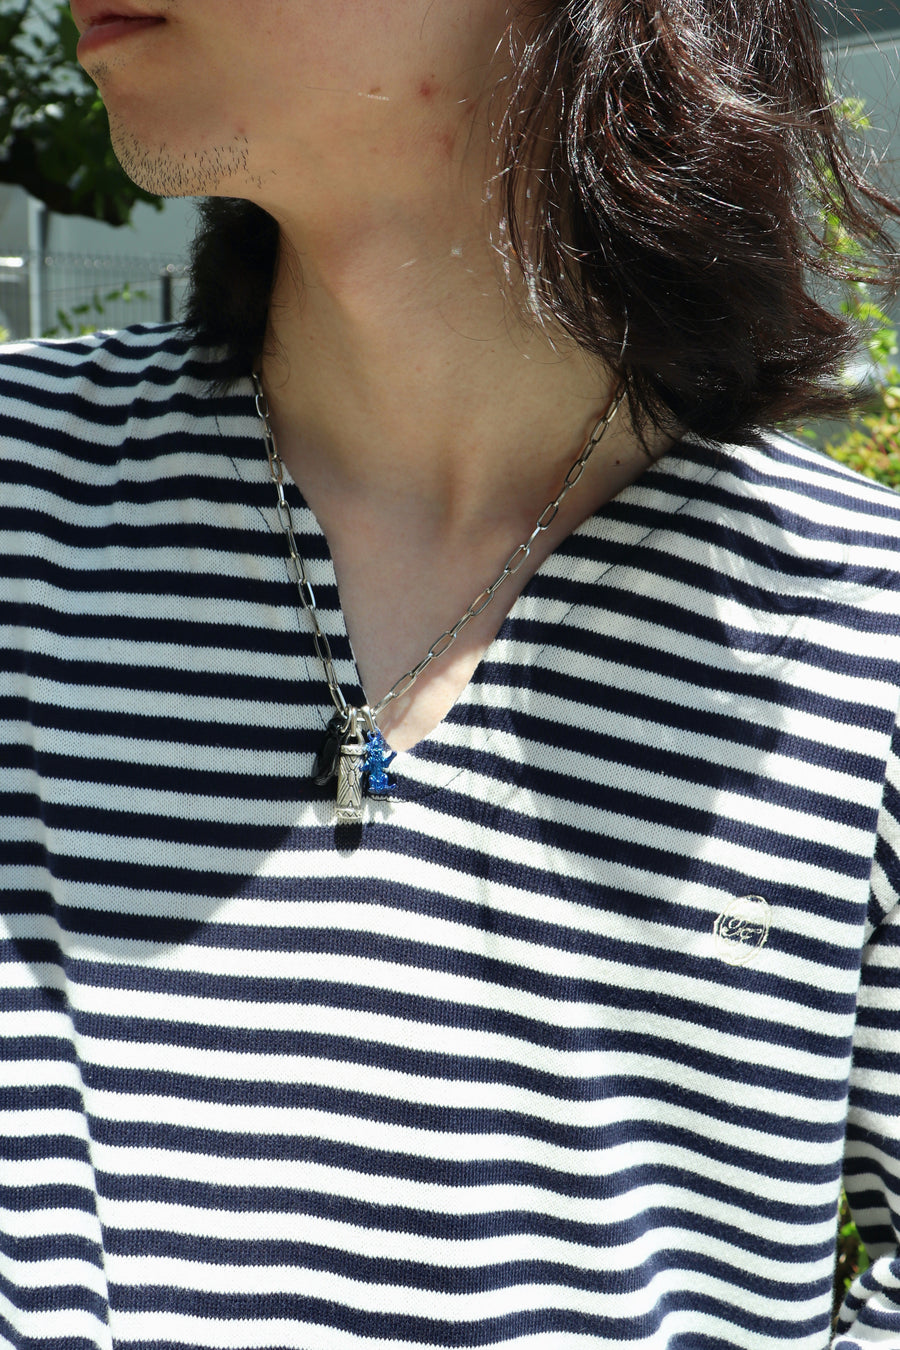 TOGA VIRILIS(トーガ ビリリース)22awのMotif necklace MIXの通販 ...